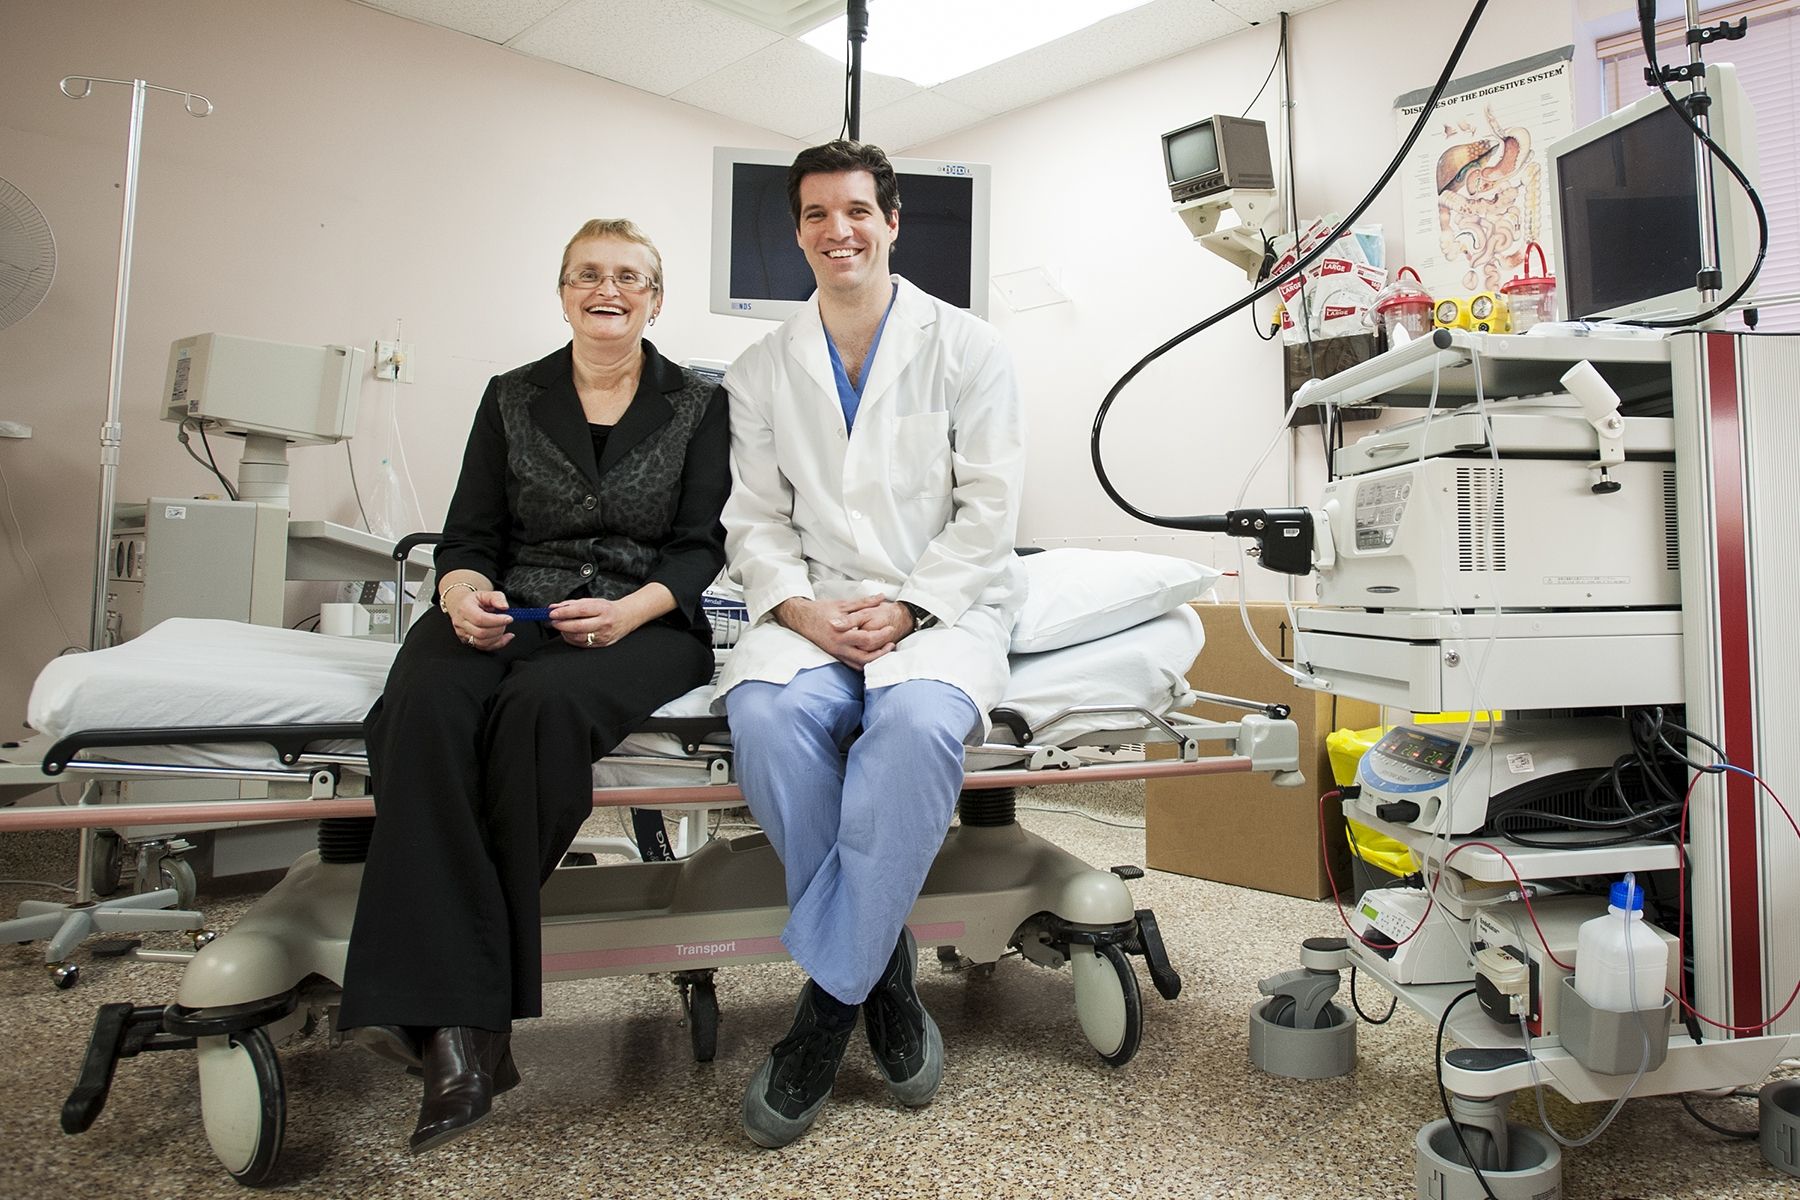 Dr Hookey and Patient_Dec 14 2012